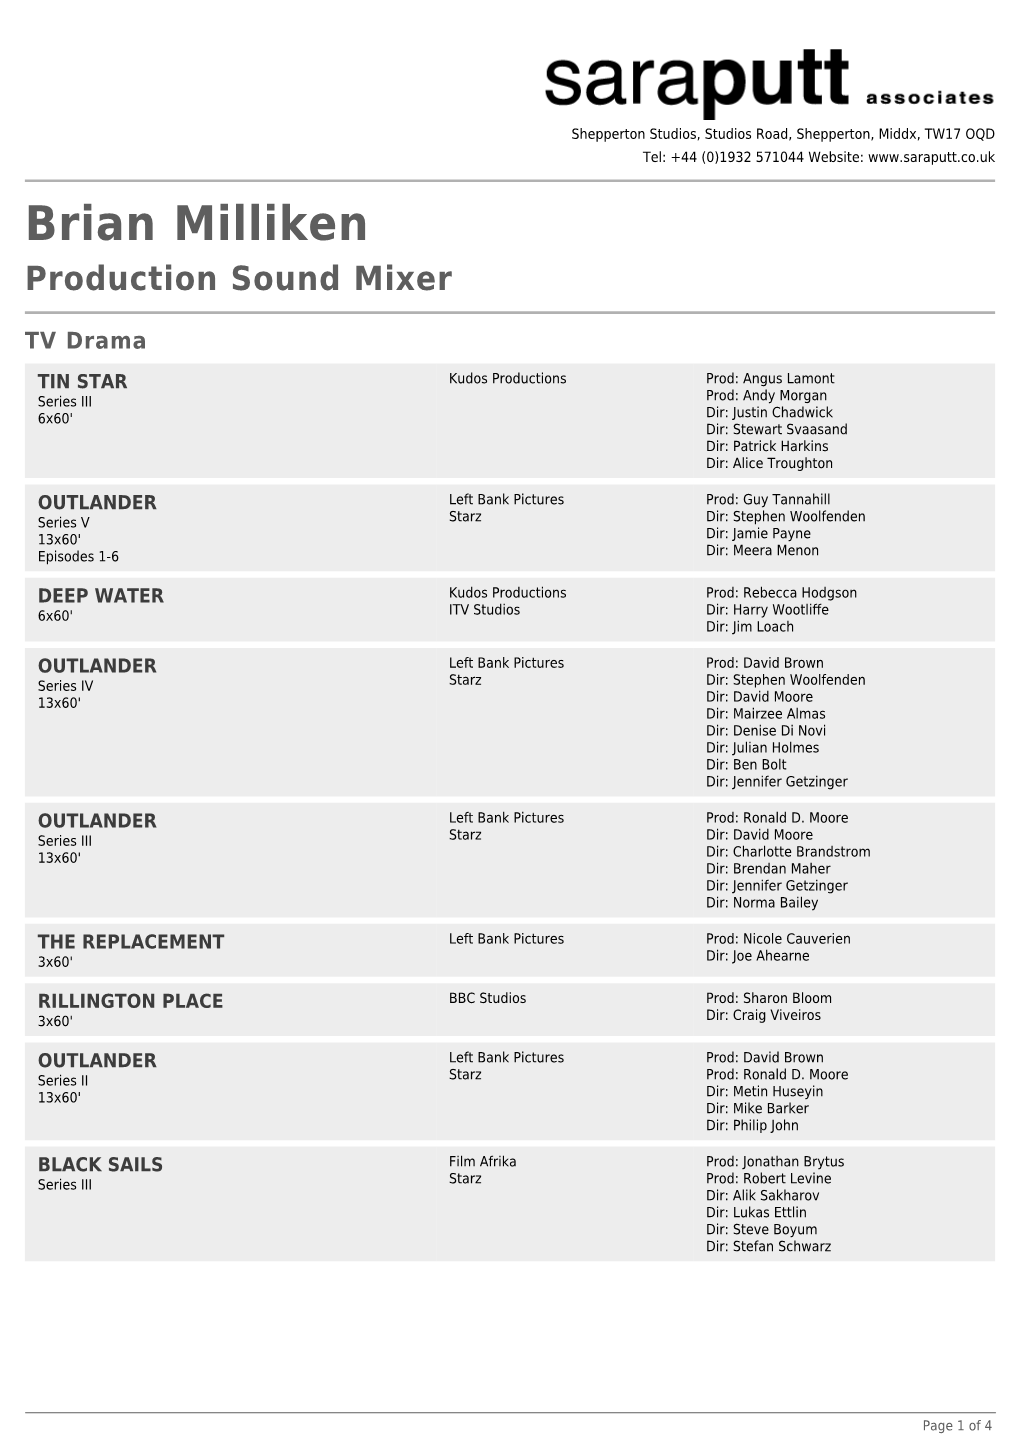 Brian Milliken Production Sound Mixer